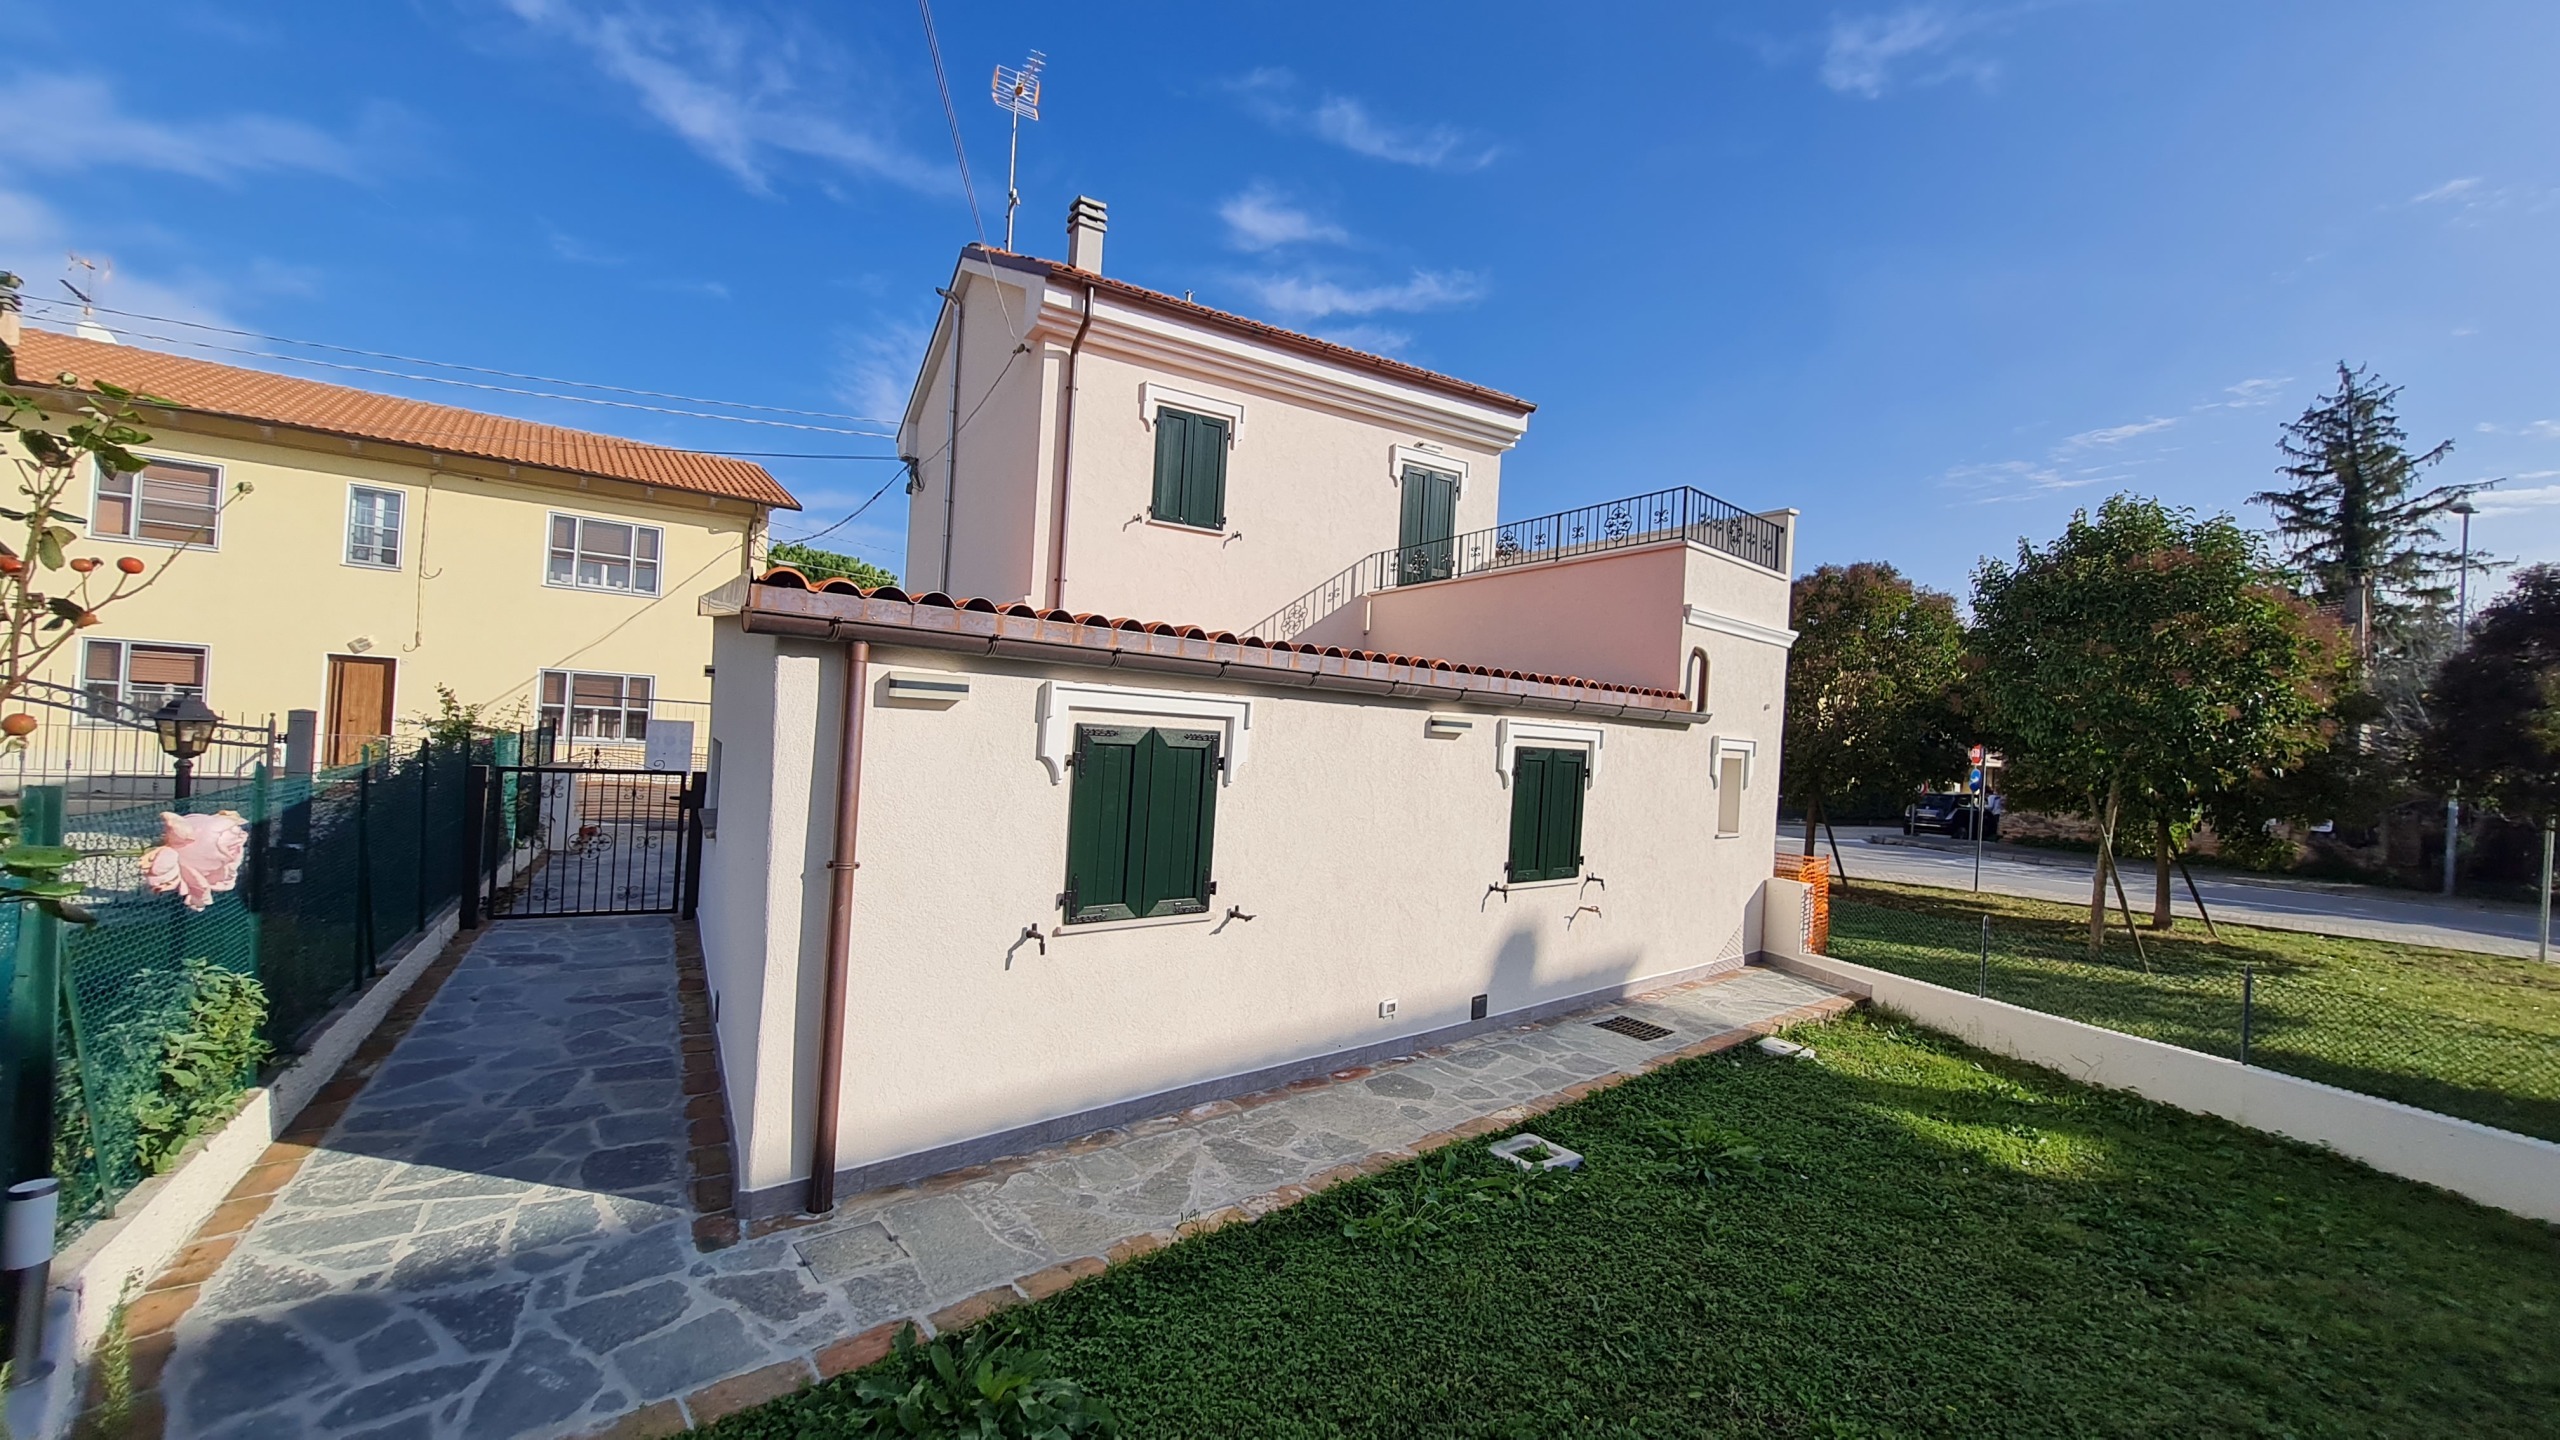 Villa ristrutturata a Pesaro